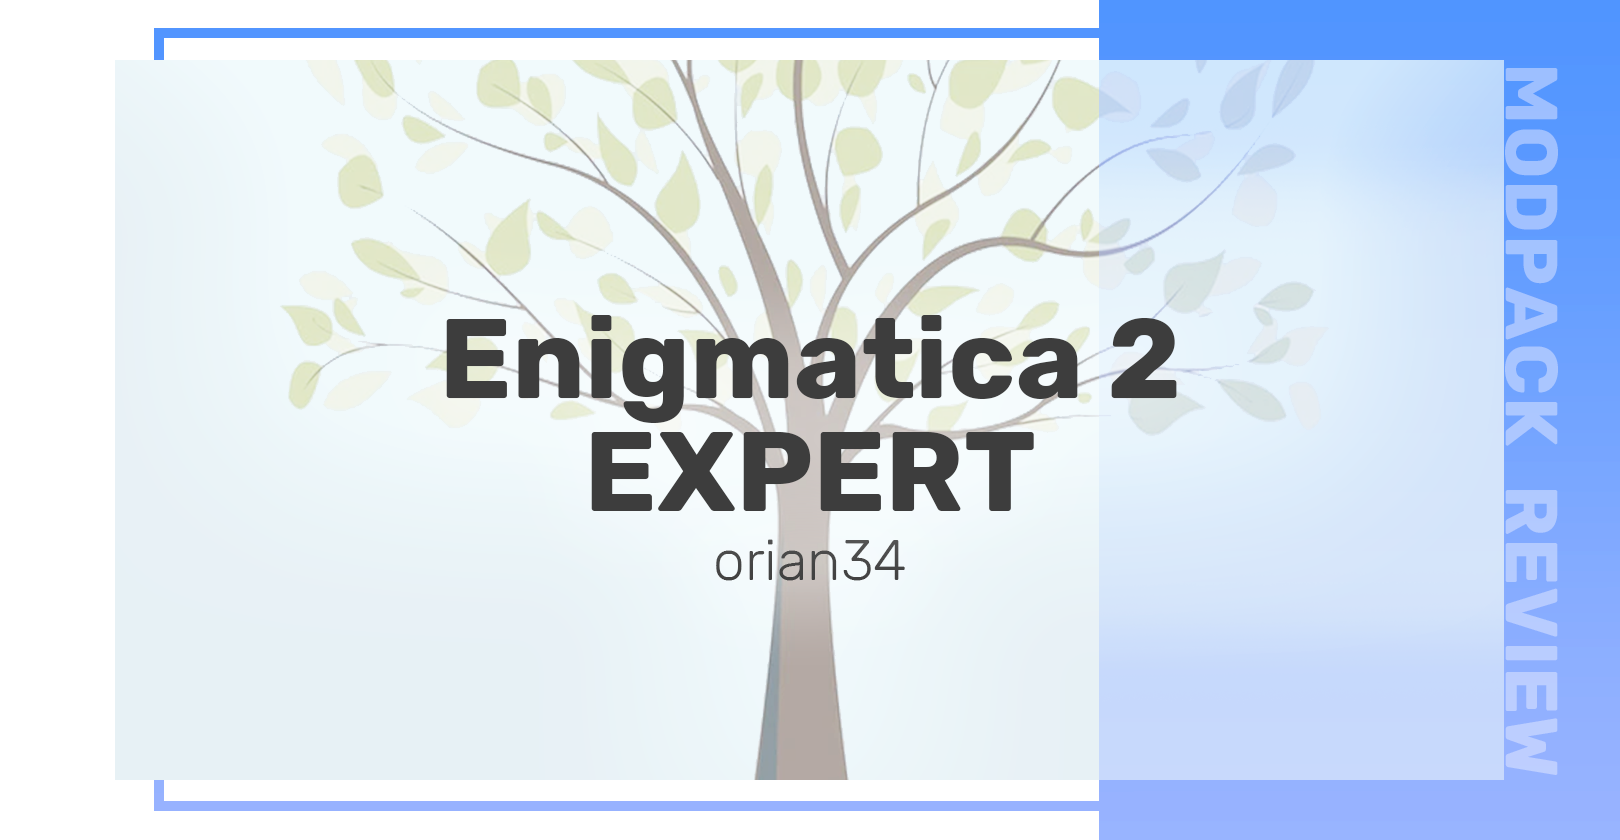 Walking Through Enigmatica 2 Expert